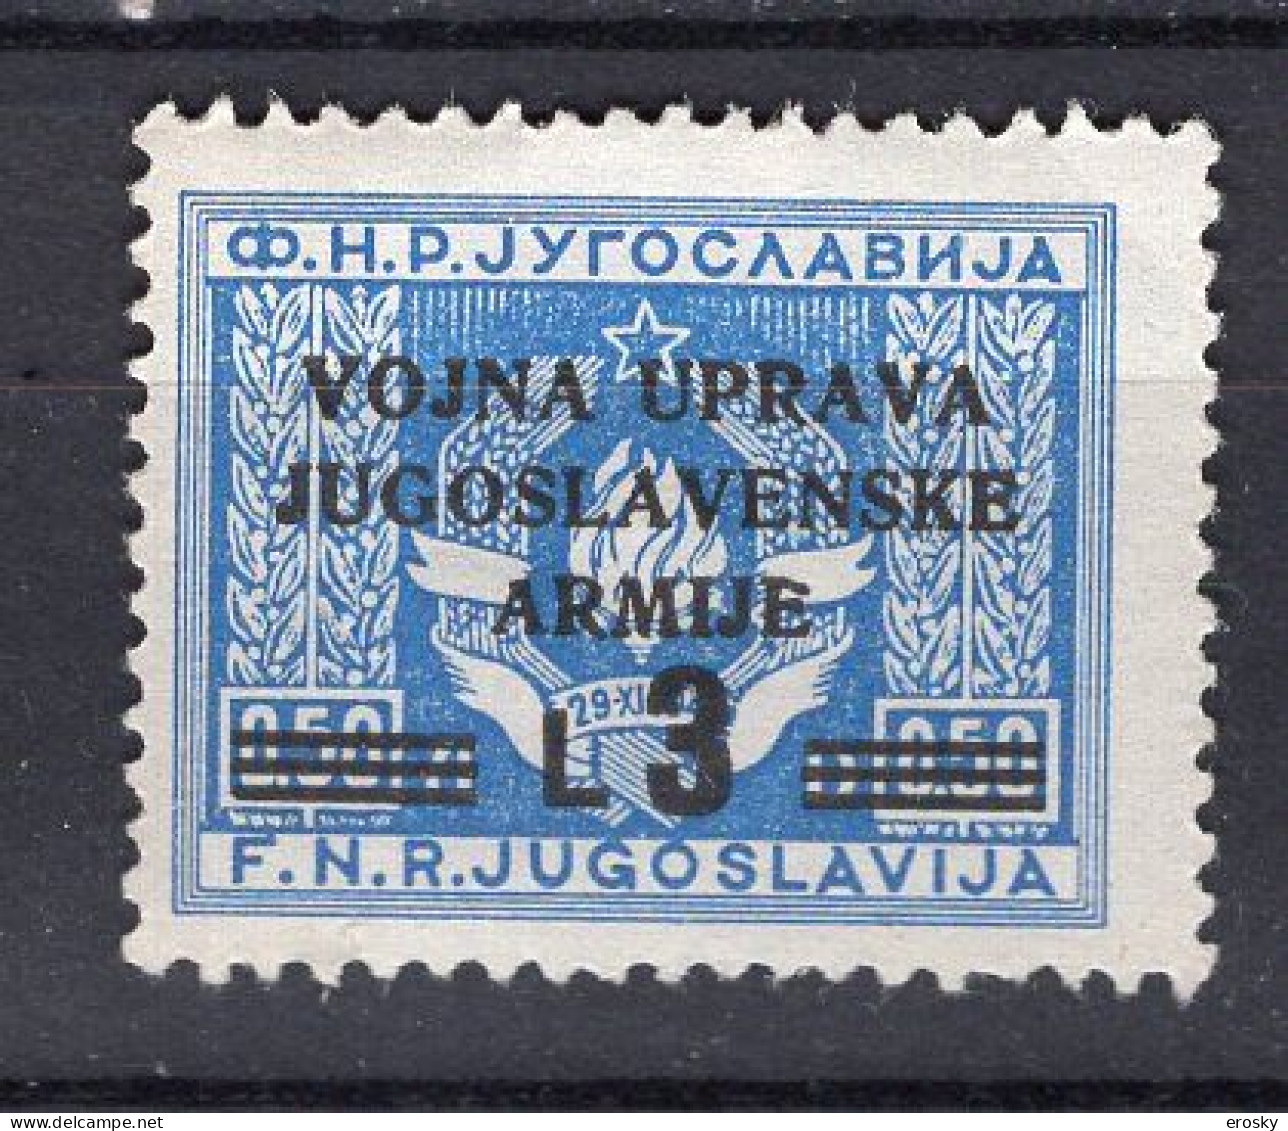 Z4307 - ISTRIA LITORALE SLOVENO SASSONE N°70 * - Ocu. Yugoslava: Litoral Esloveno